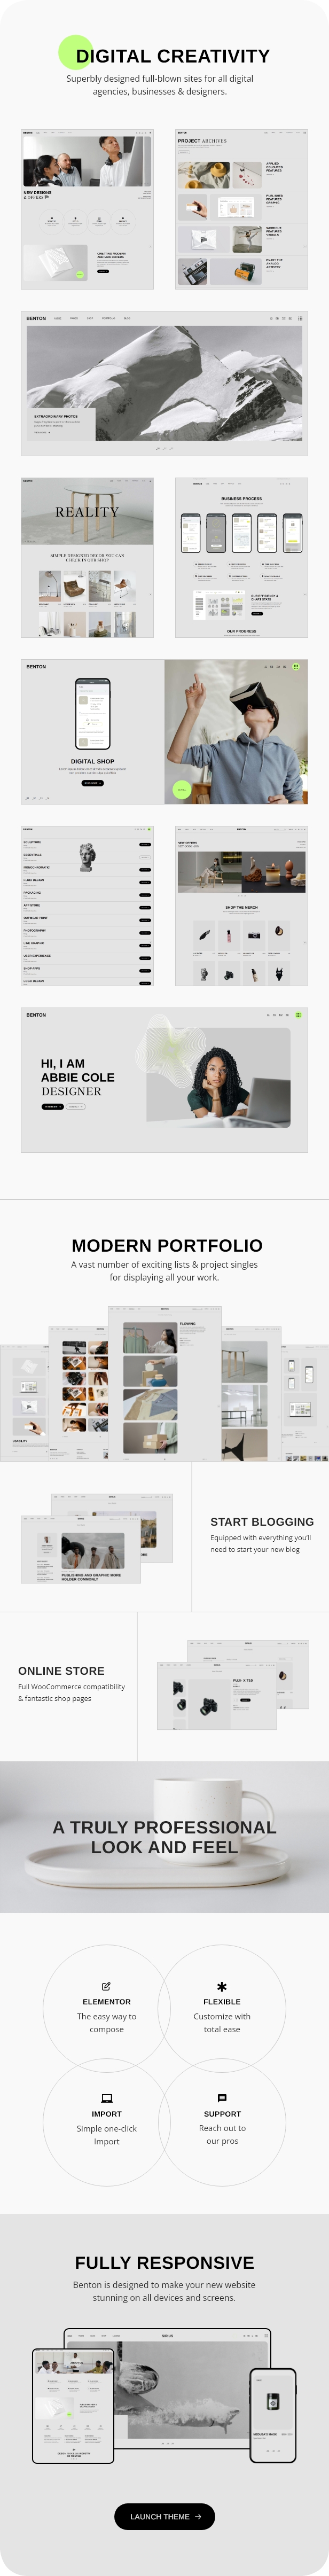 Benton - Digital Agency & Design Theme - 3